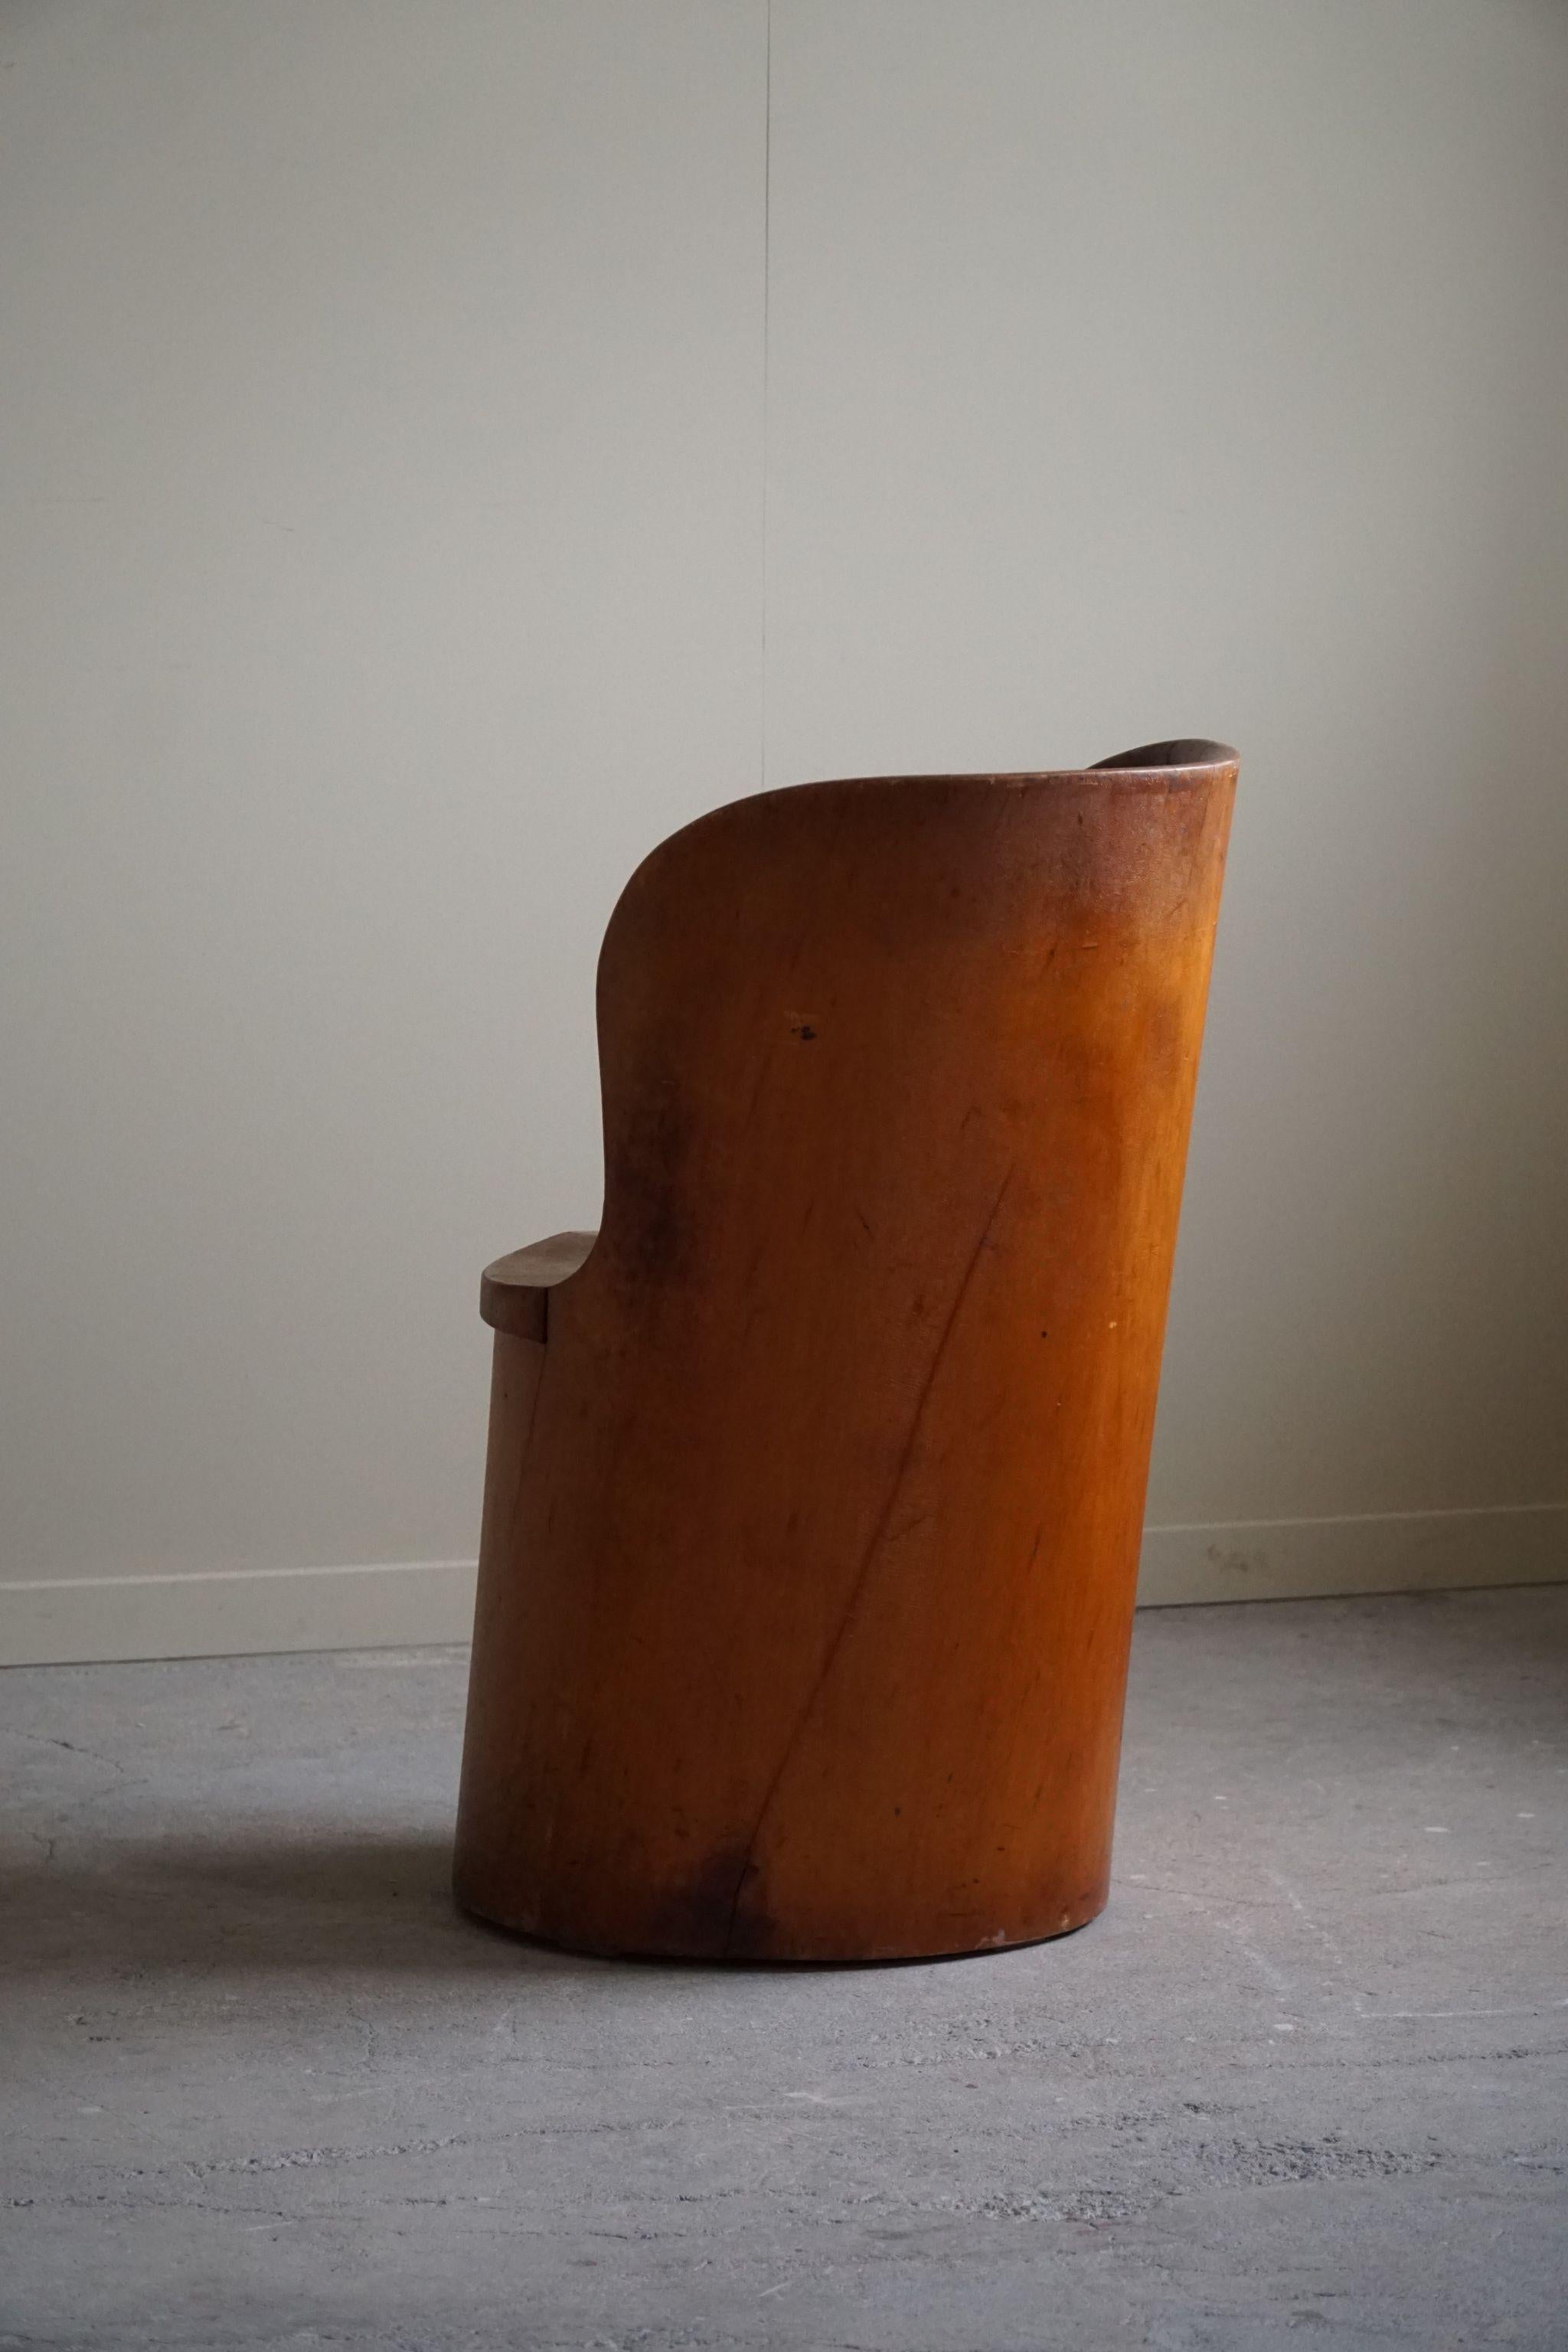  Hand Carved Primitive Stump Chair in Pine, Swedish Modern, Wabi Sabi, 1960s For Sale 6